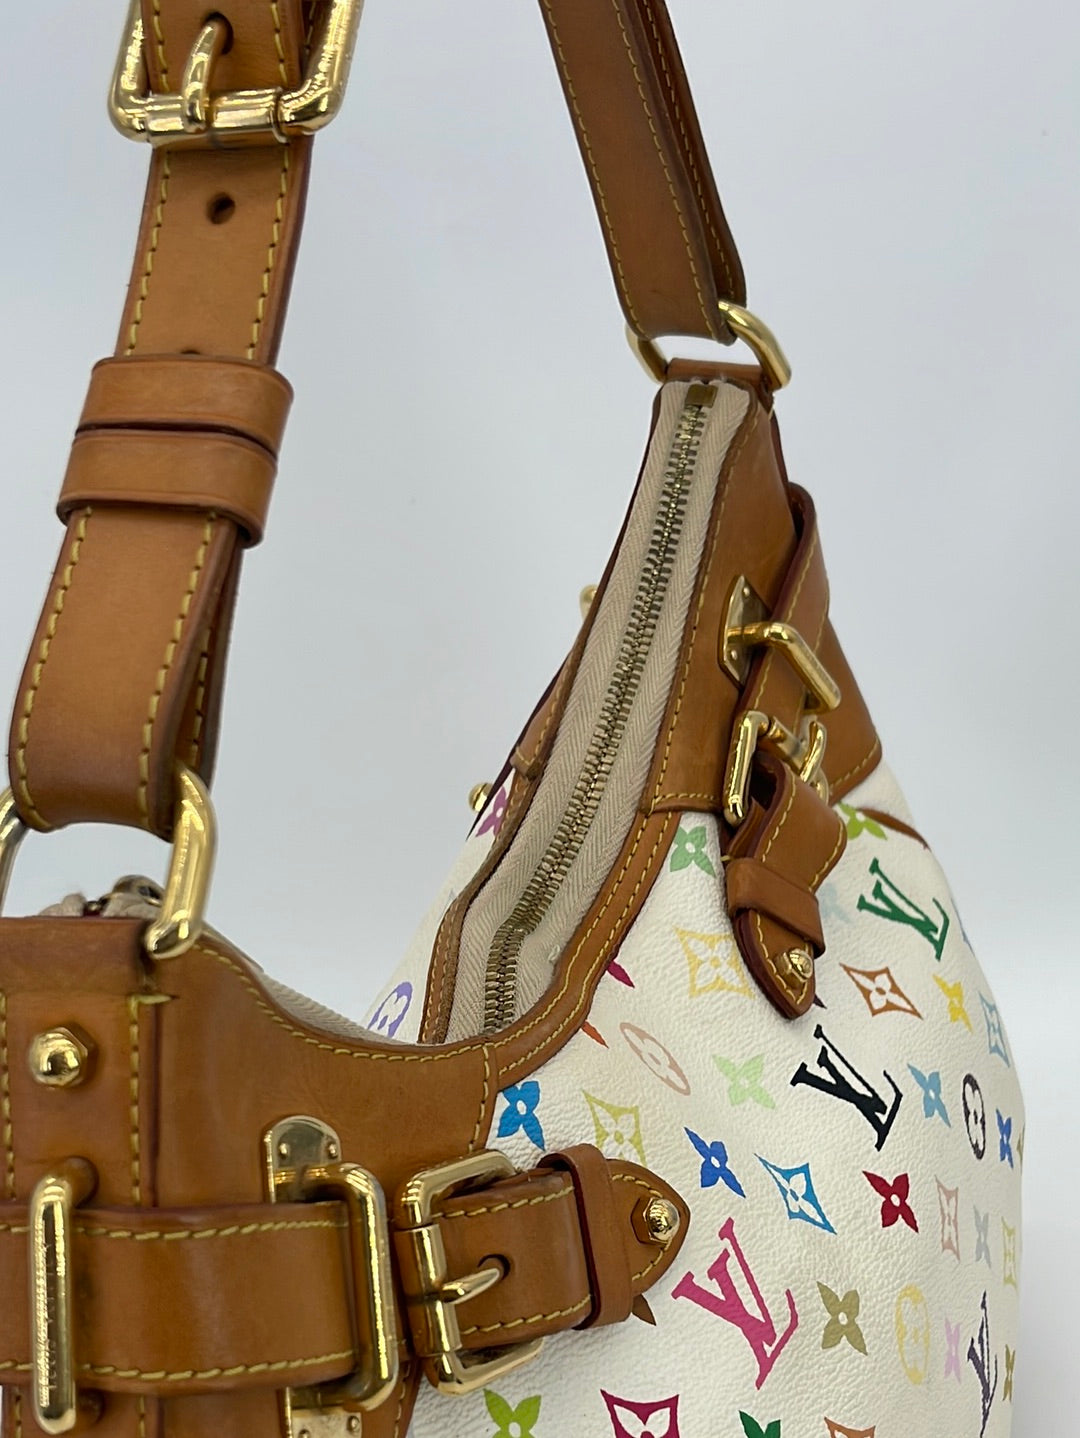 Louis Vuitton Lv Shoulder Bag Greta